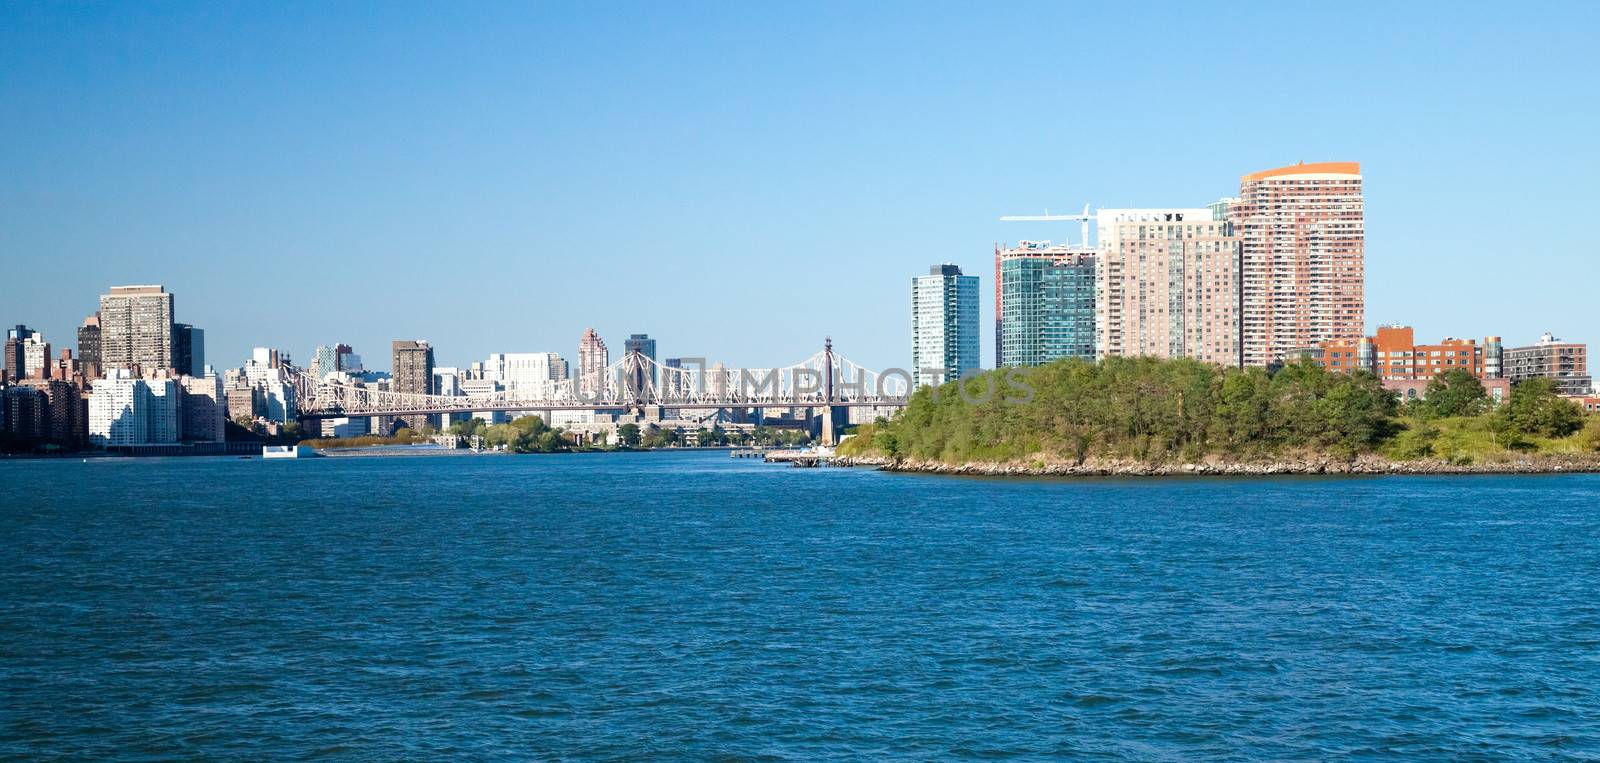 New York  Long Island City and Queensboro Bridge